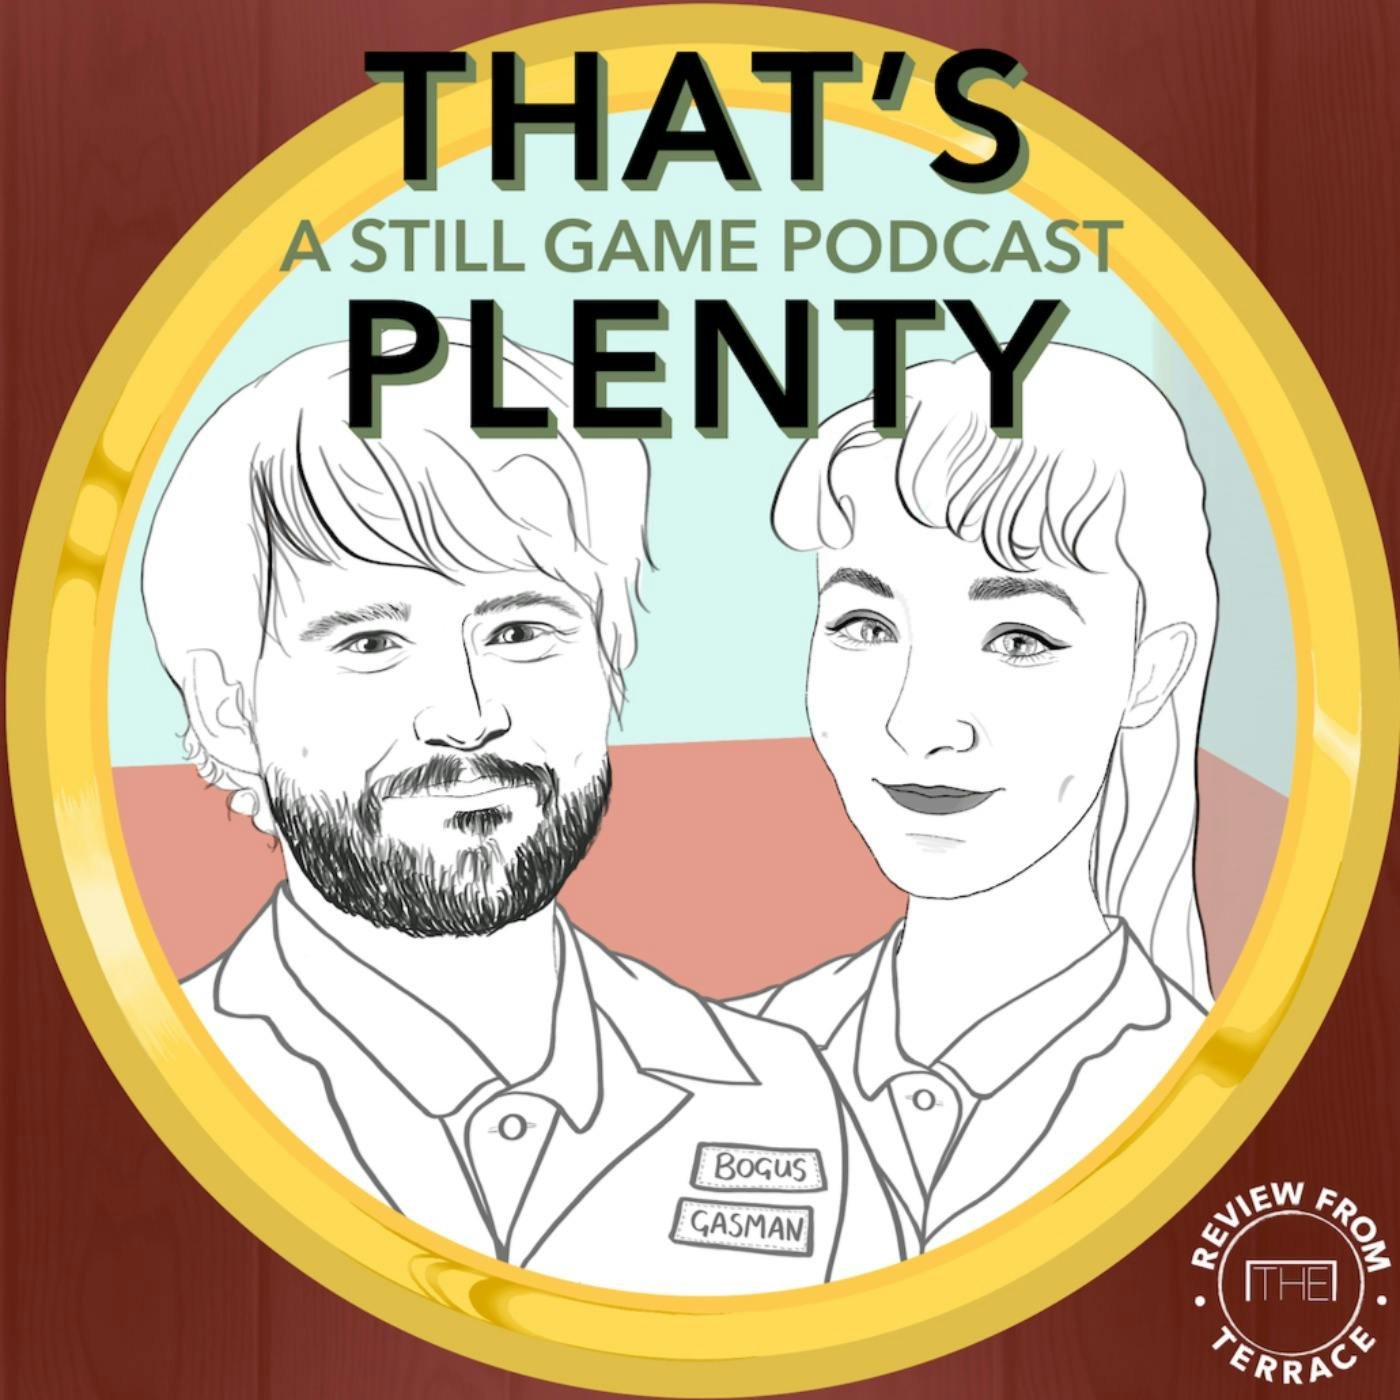 That's Plenty: A Still Game Podcast (episode 3: Cauld)